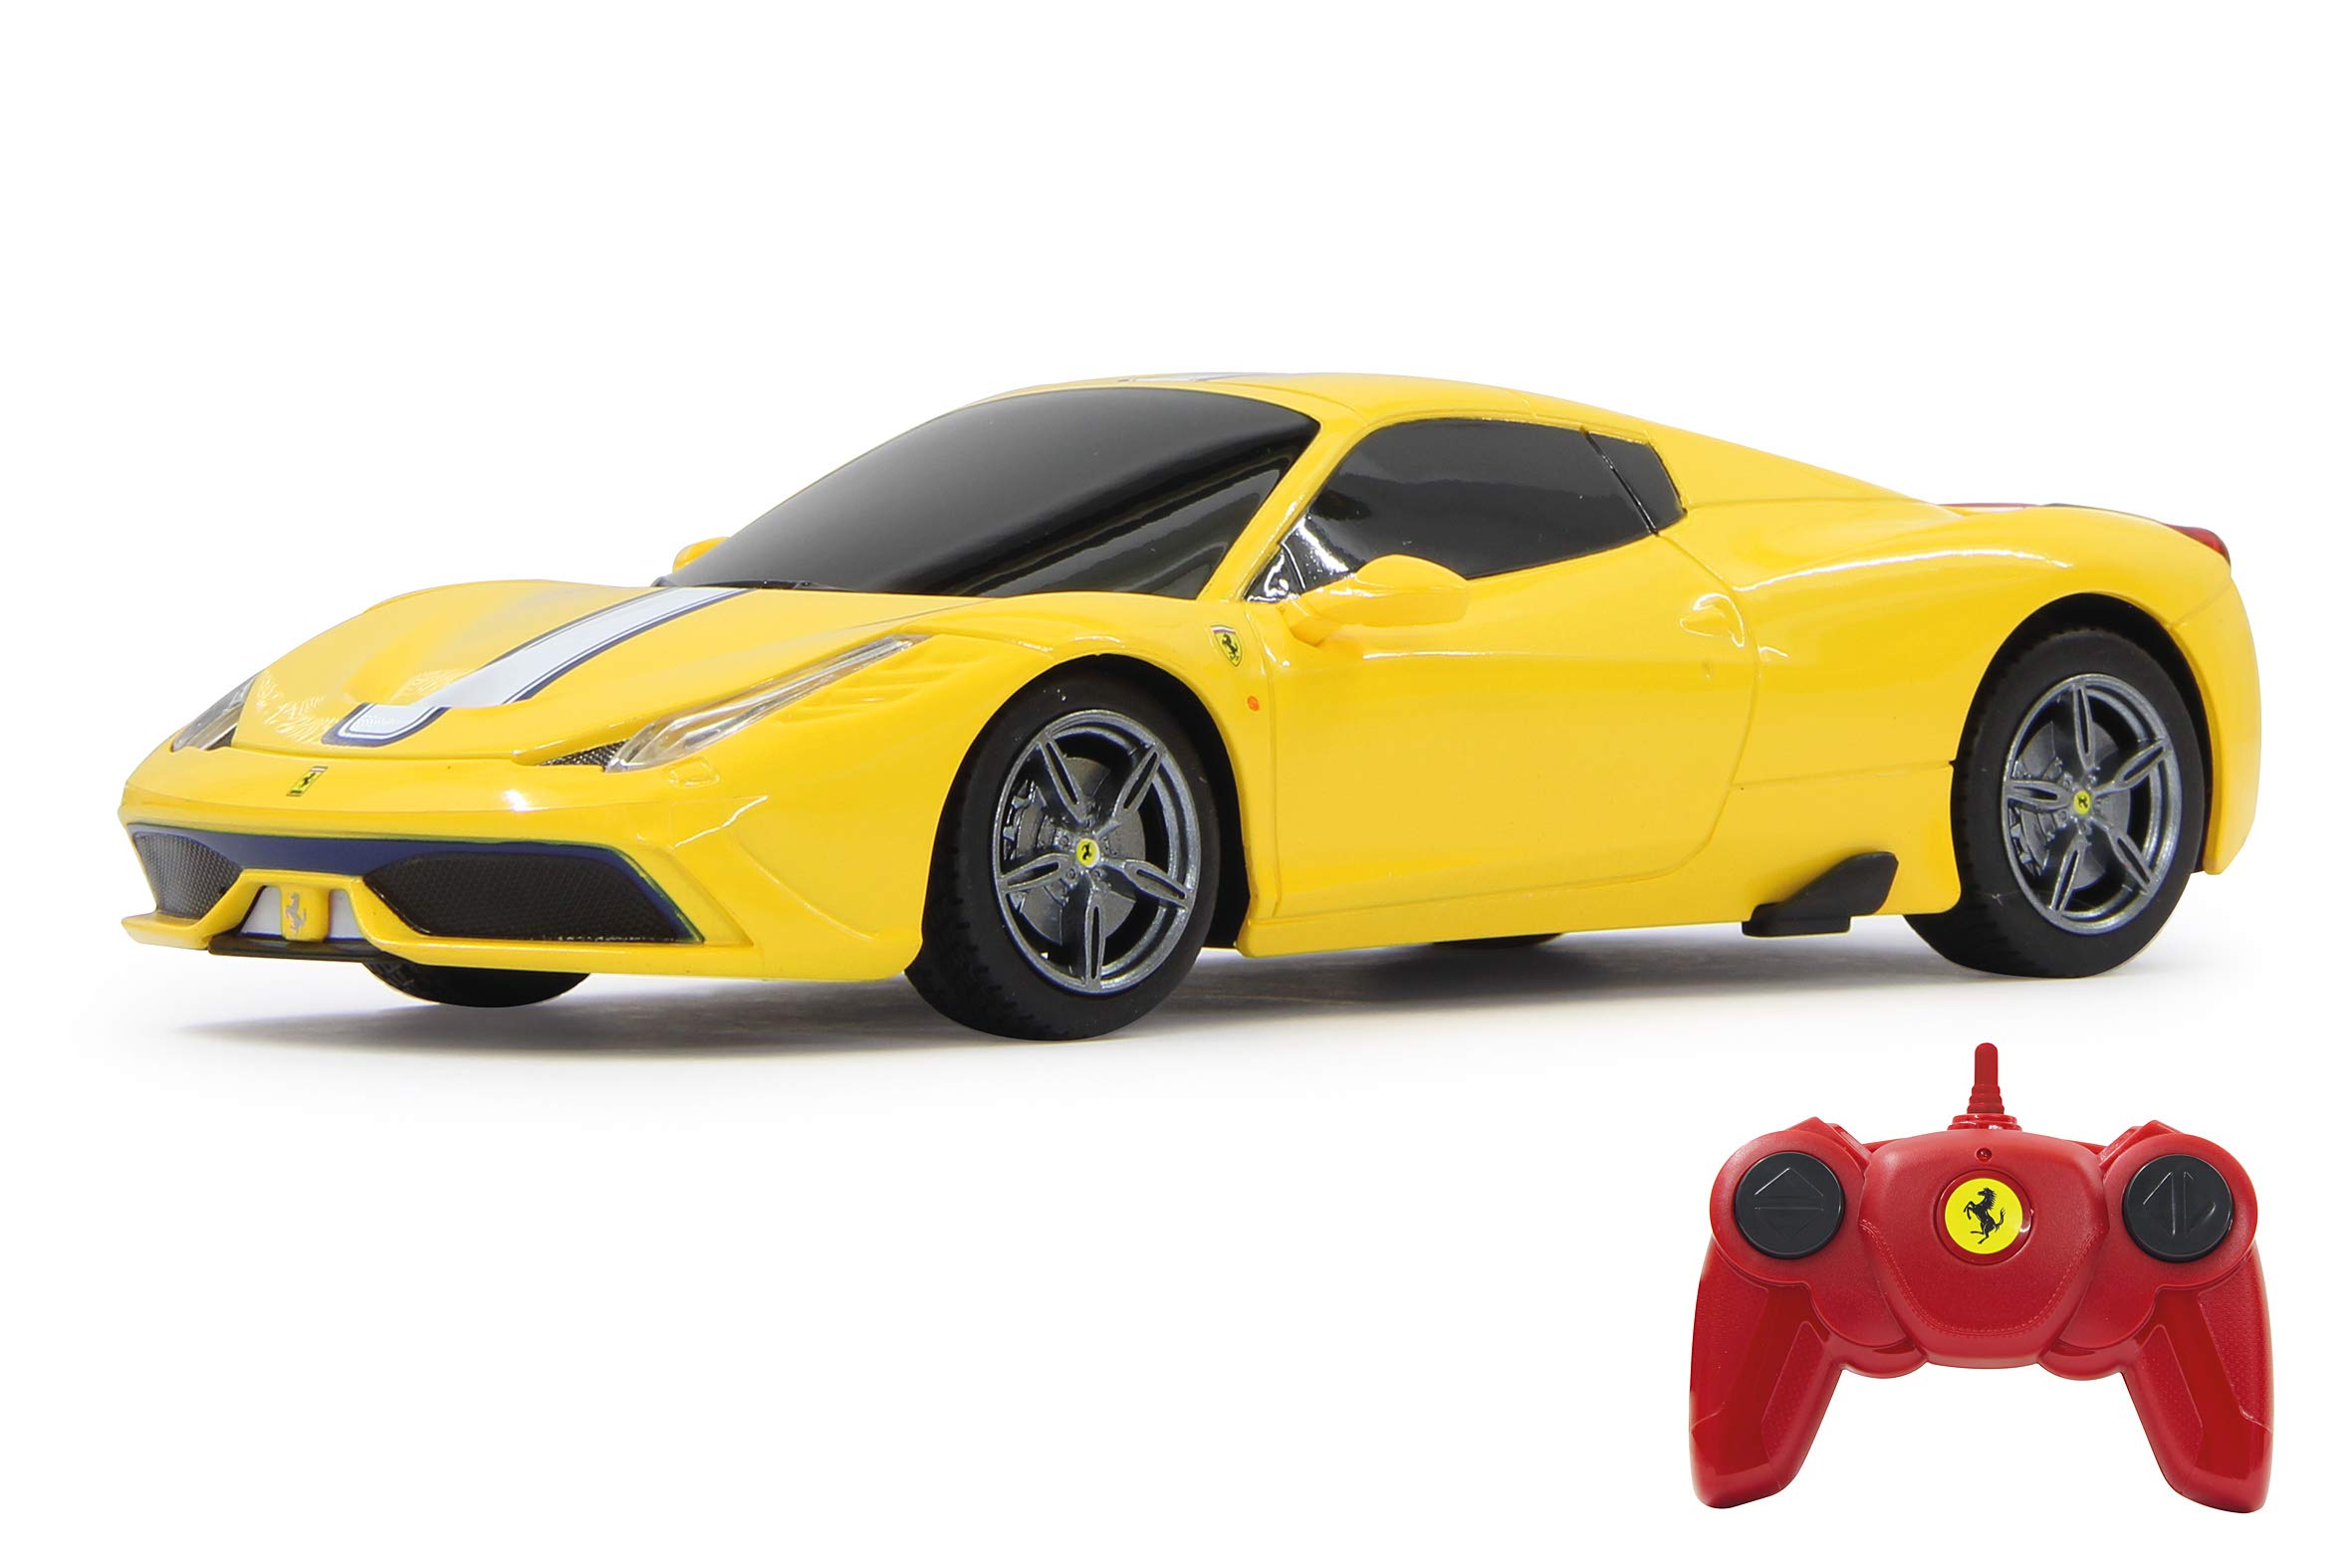 JAMARA 405032 - Ferrari 458 Speciale A 1:24 2,4Ghz - offiziell lizenziert, bis zu 1 Stunde Fahrzeit bei ca. 9 Km/h, perfekt nachgebildete Details, hochwertige Verarbeitung, Gelb